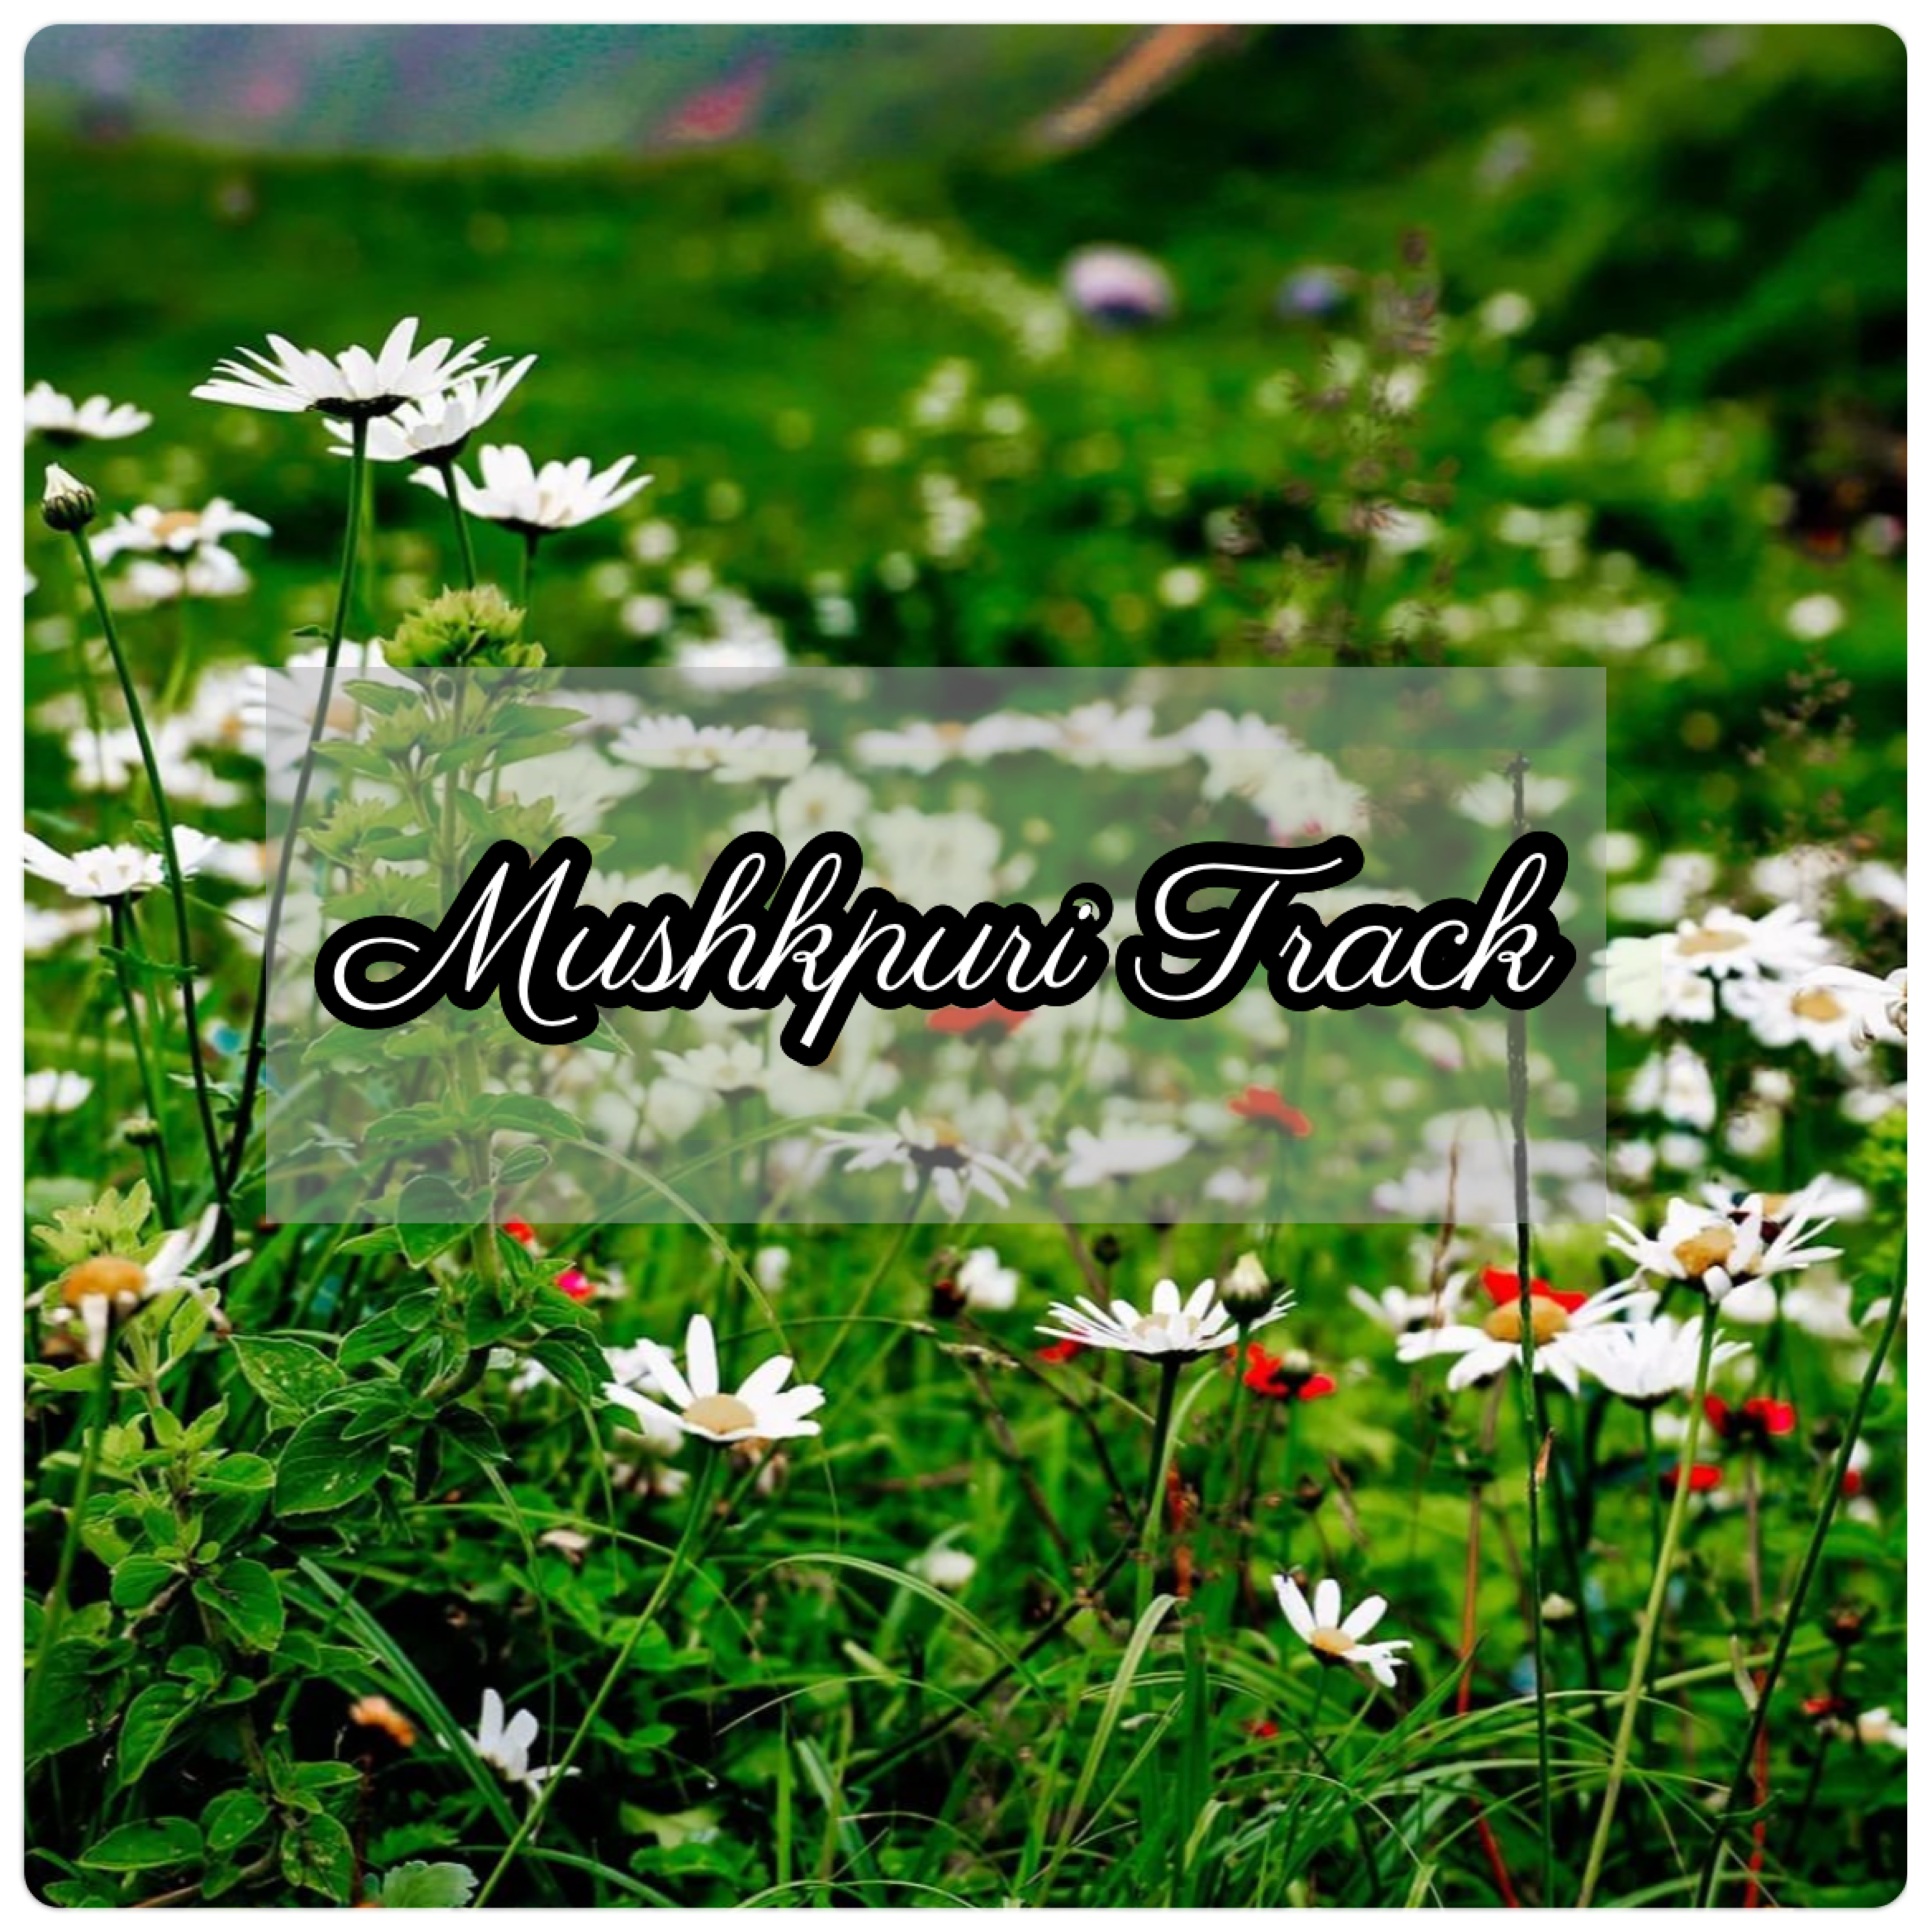 Mushkpuri Track